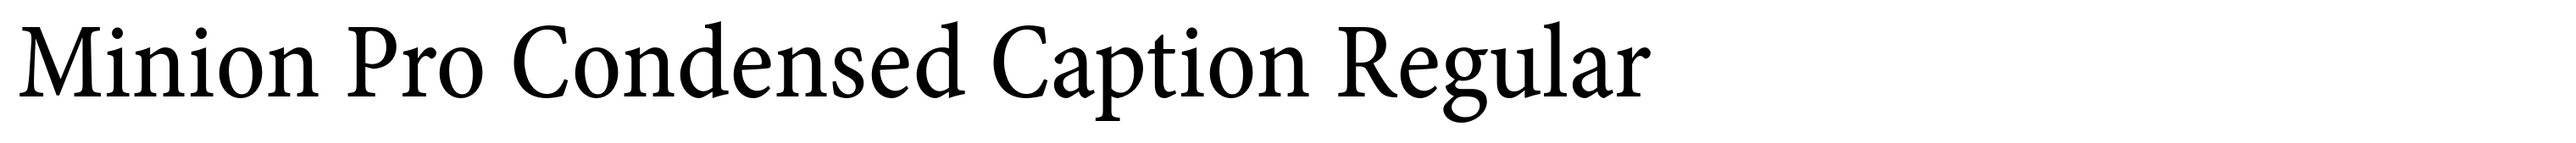 Minion Pro Condensed Caption Regular